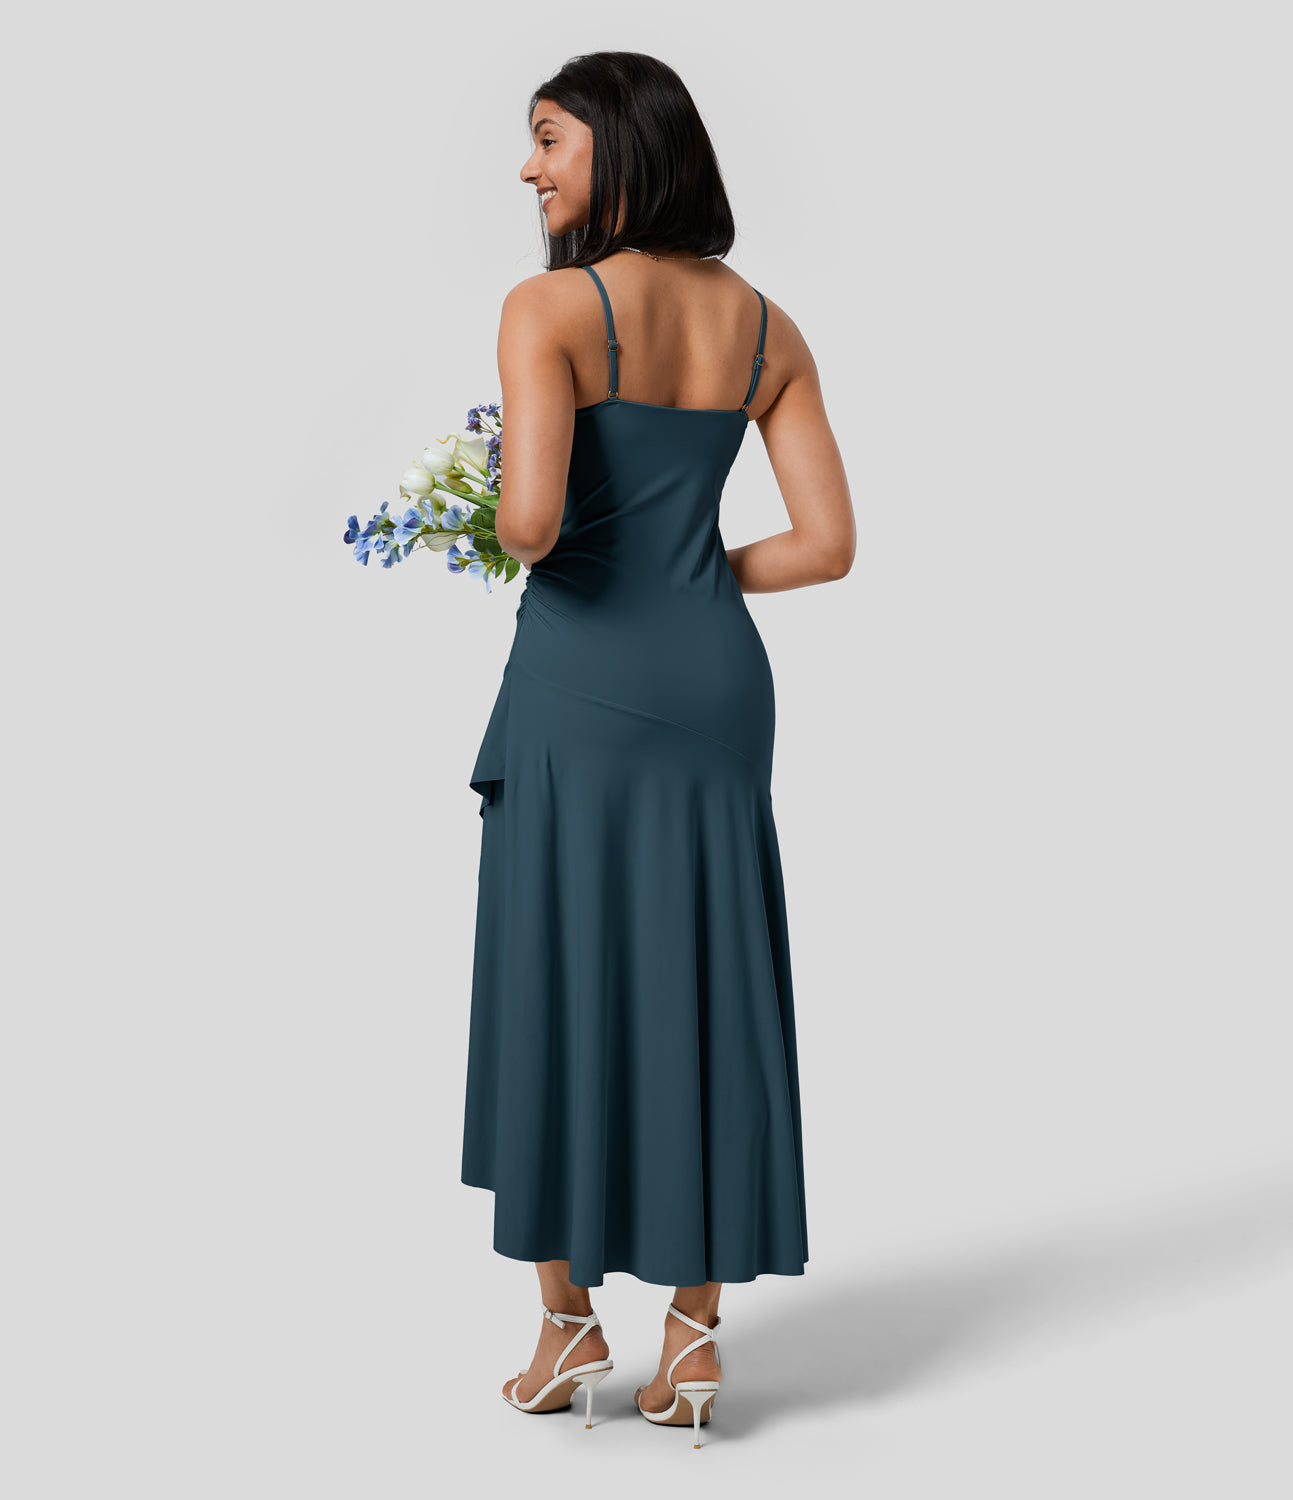 

Halara Backless Adjustable Strap Ruched Split Flowy Maxi Bridesmaid & Wedding Guest Dress Casual Dress - Light Bean Green -  slip dress